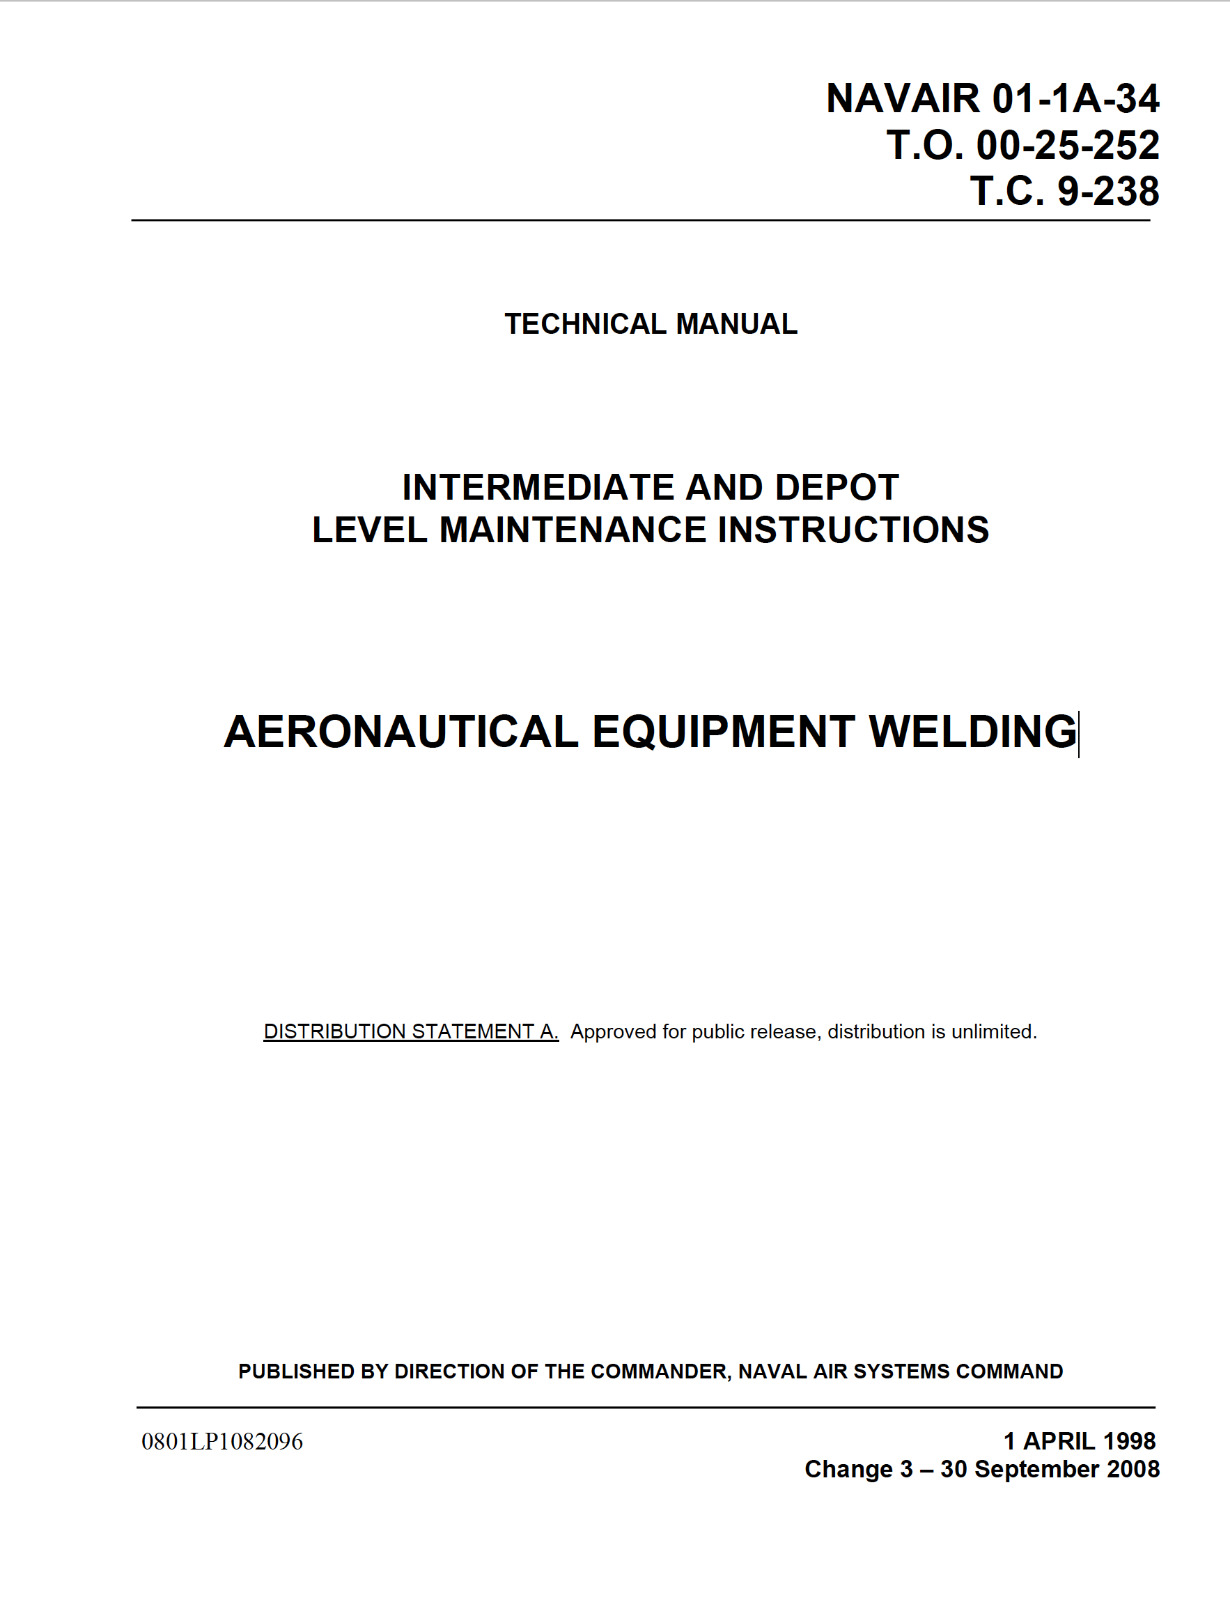 278 Page Navy NAVAIR 01-1A-34 AERONAUTICAL EQUIPMENT WELDING Manual on CD